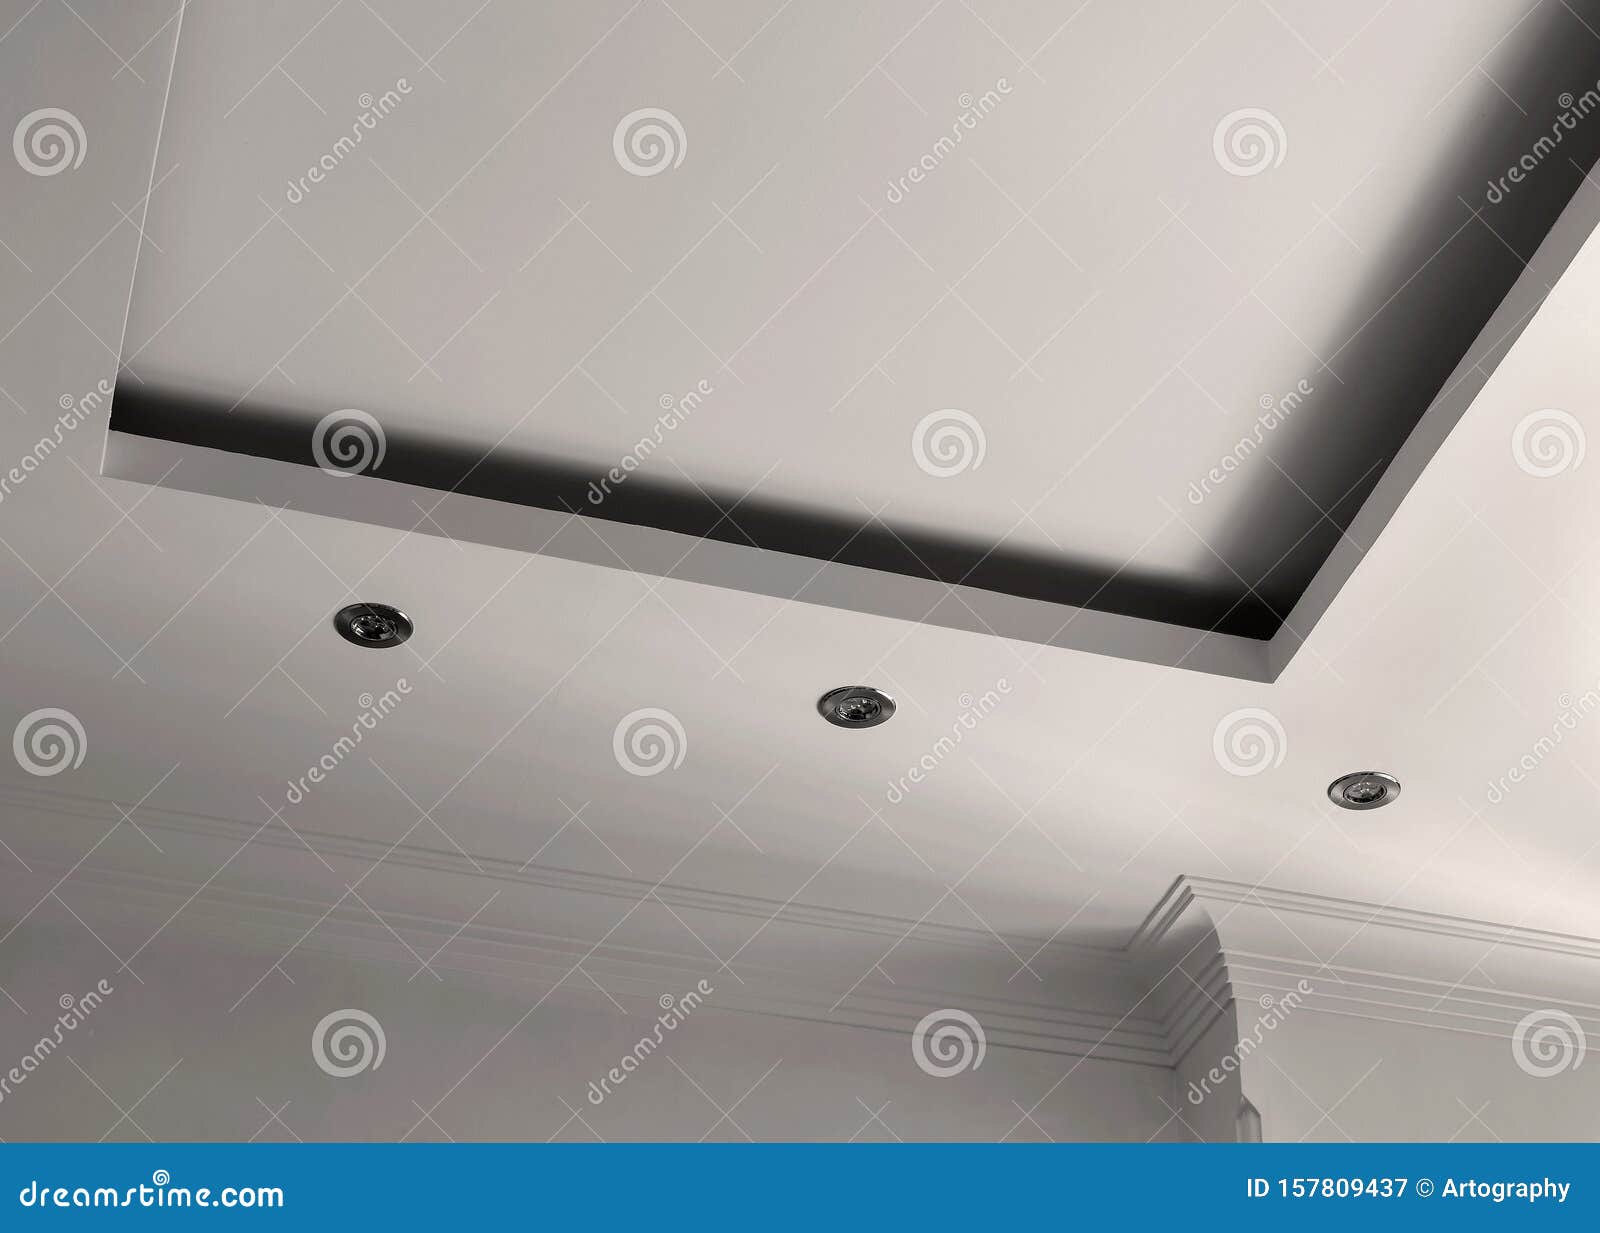 Ceiling Halogen Spots Stock Image Image Of Inside